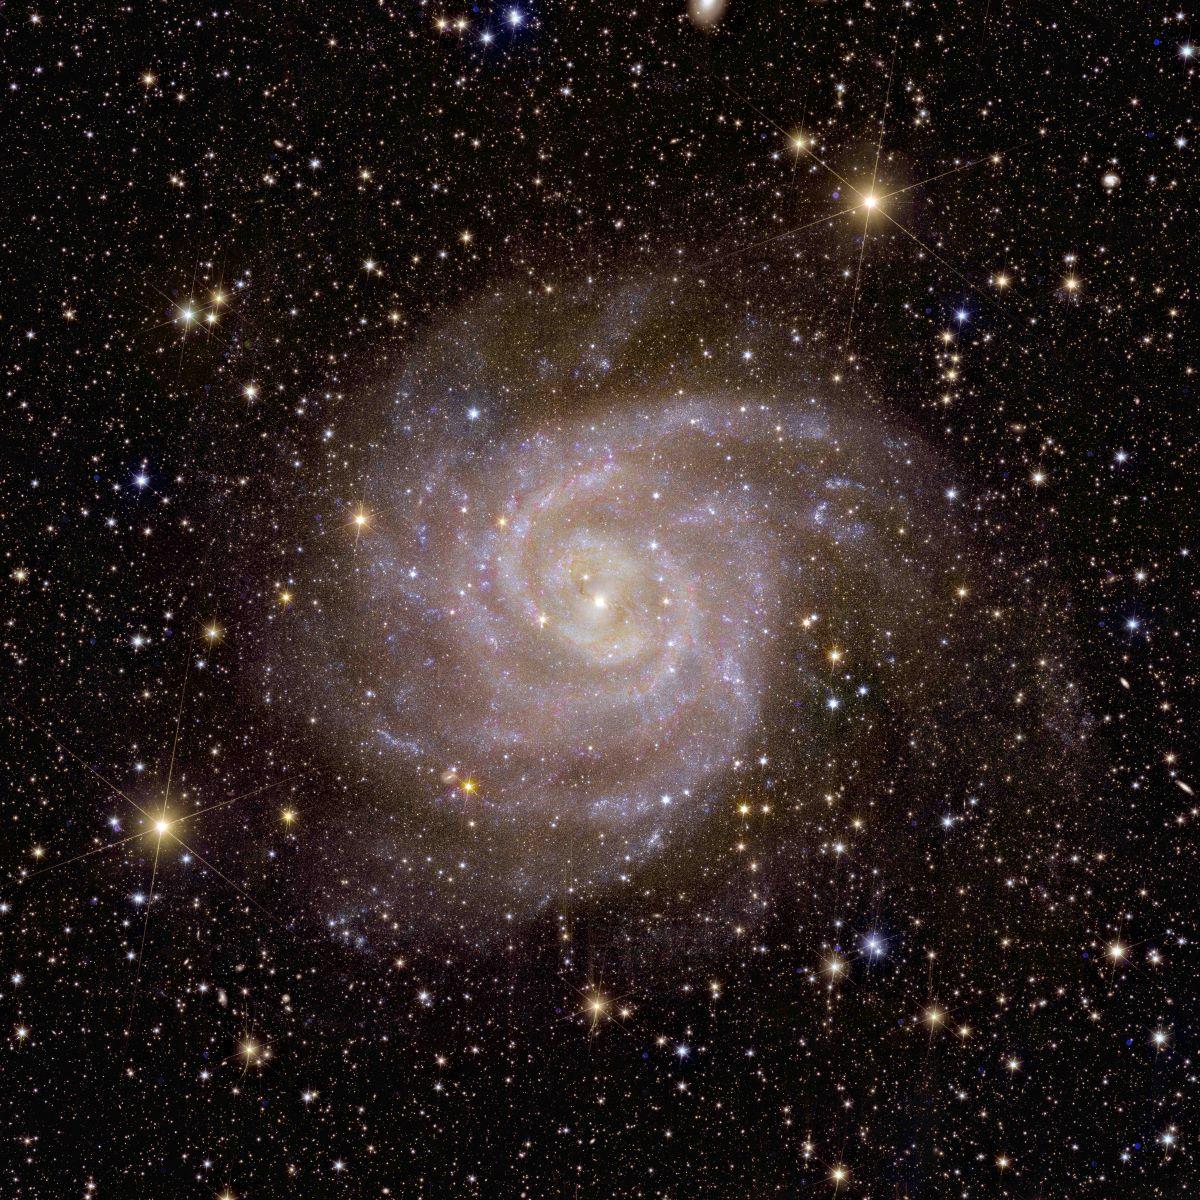 Galaxie spirale IC 342 vue par Euclid